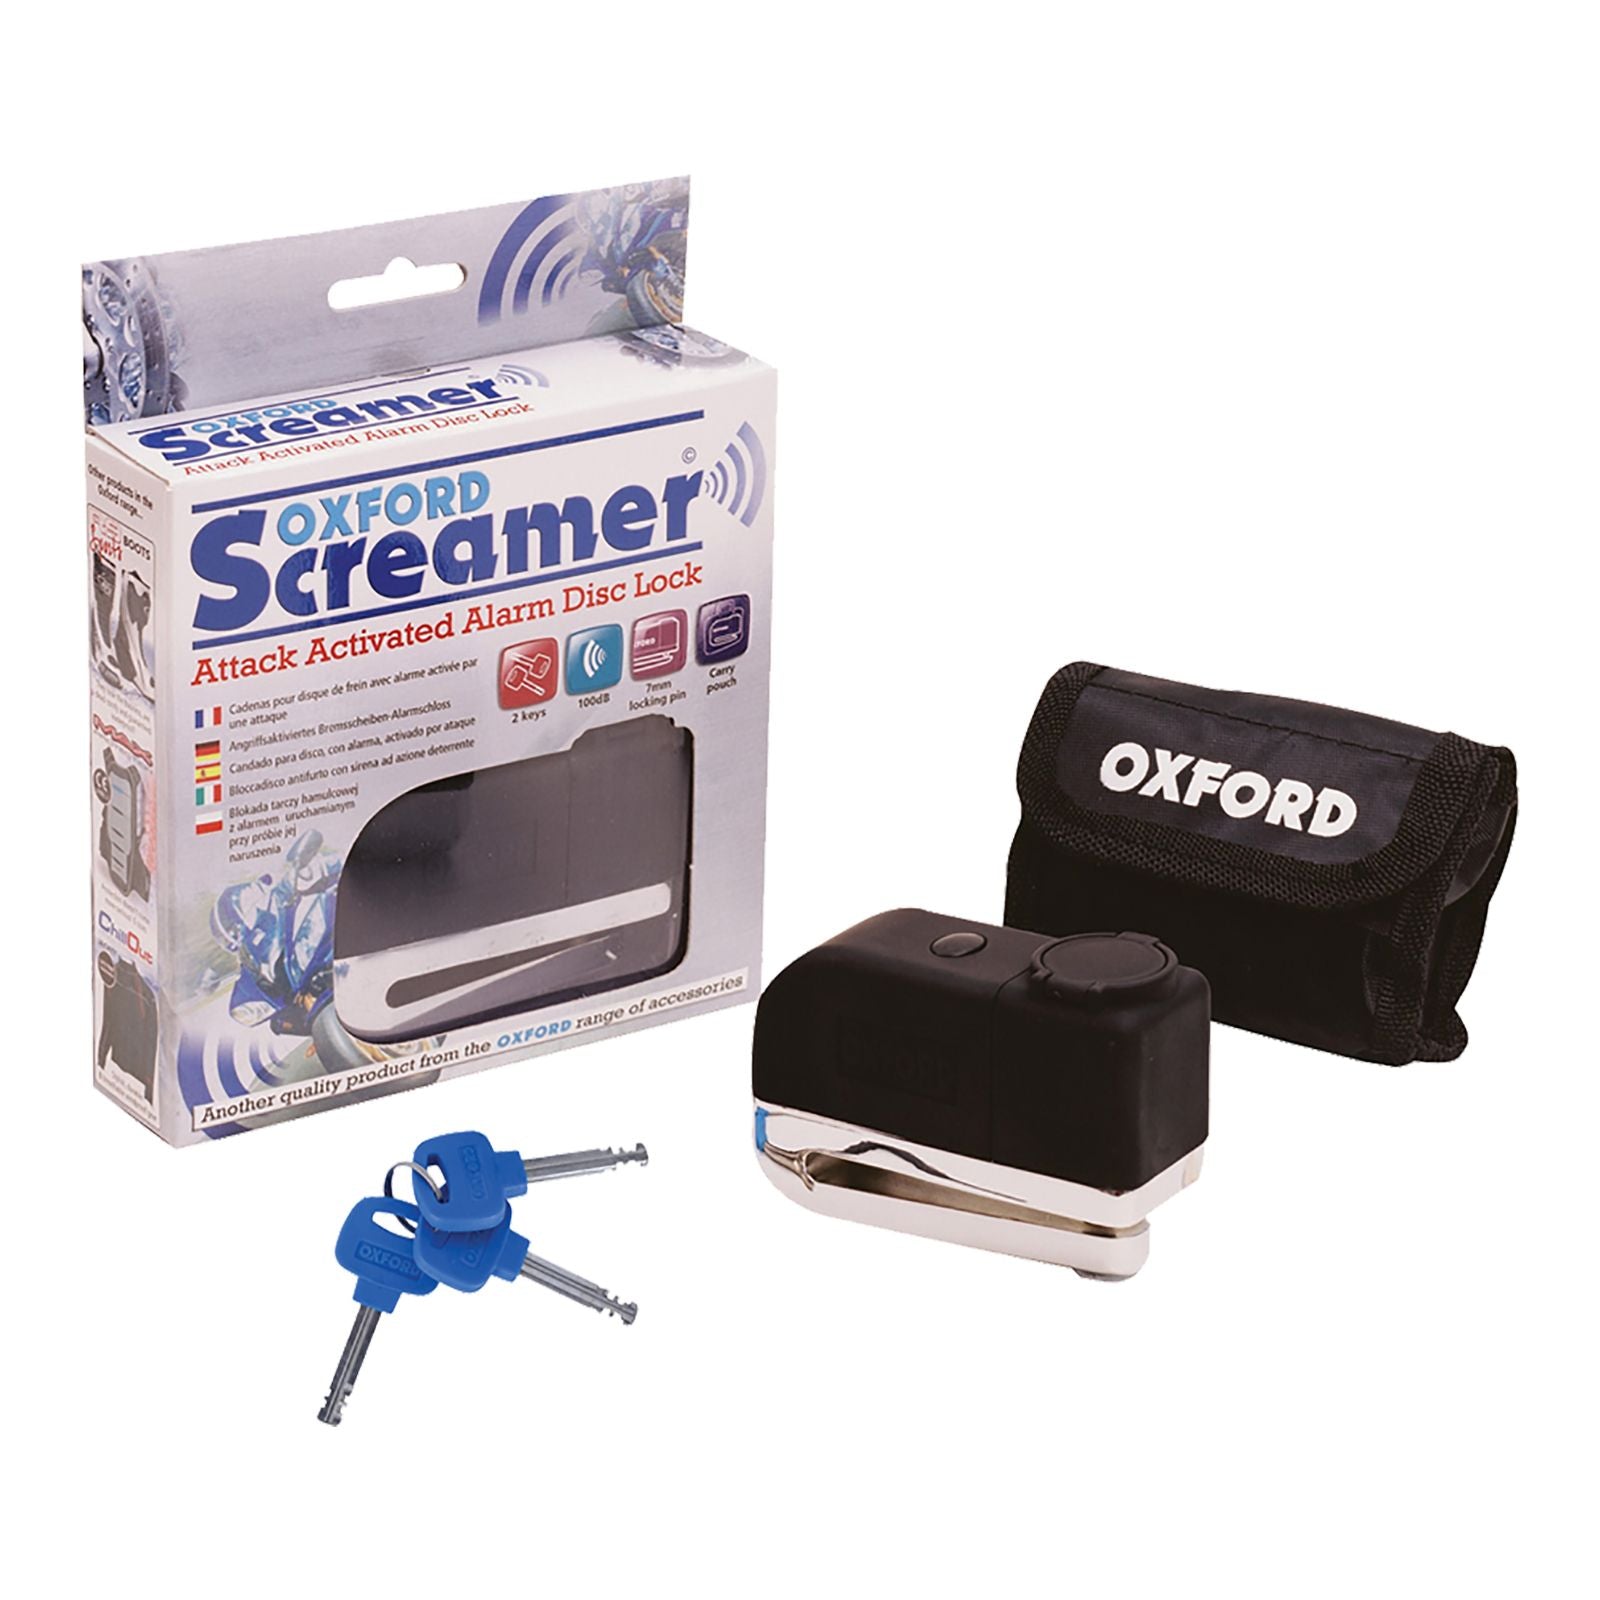 New OXFORD Screamer 100Db Alarm Disc Lock - Chrome / Black #OXOF229